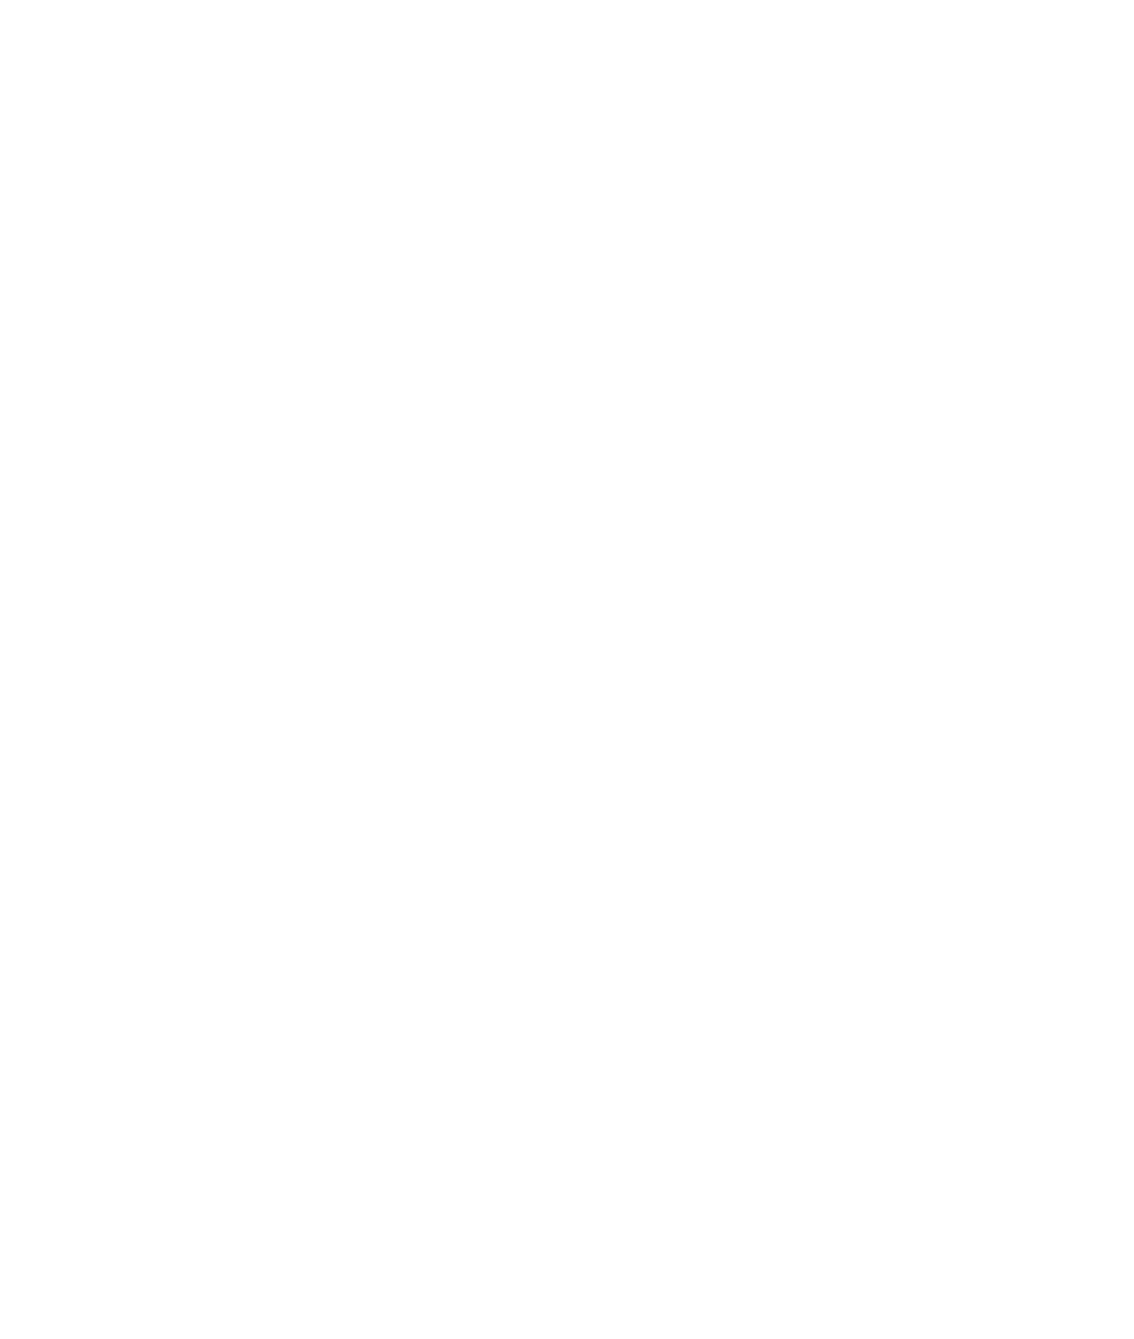 TSB Digital